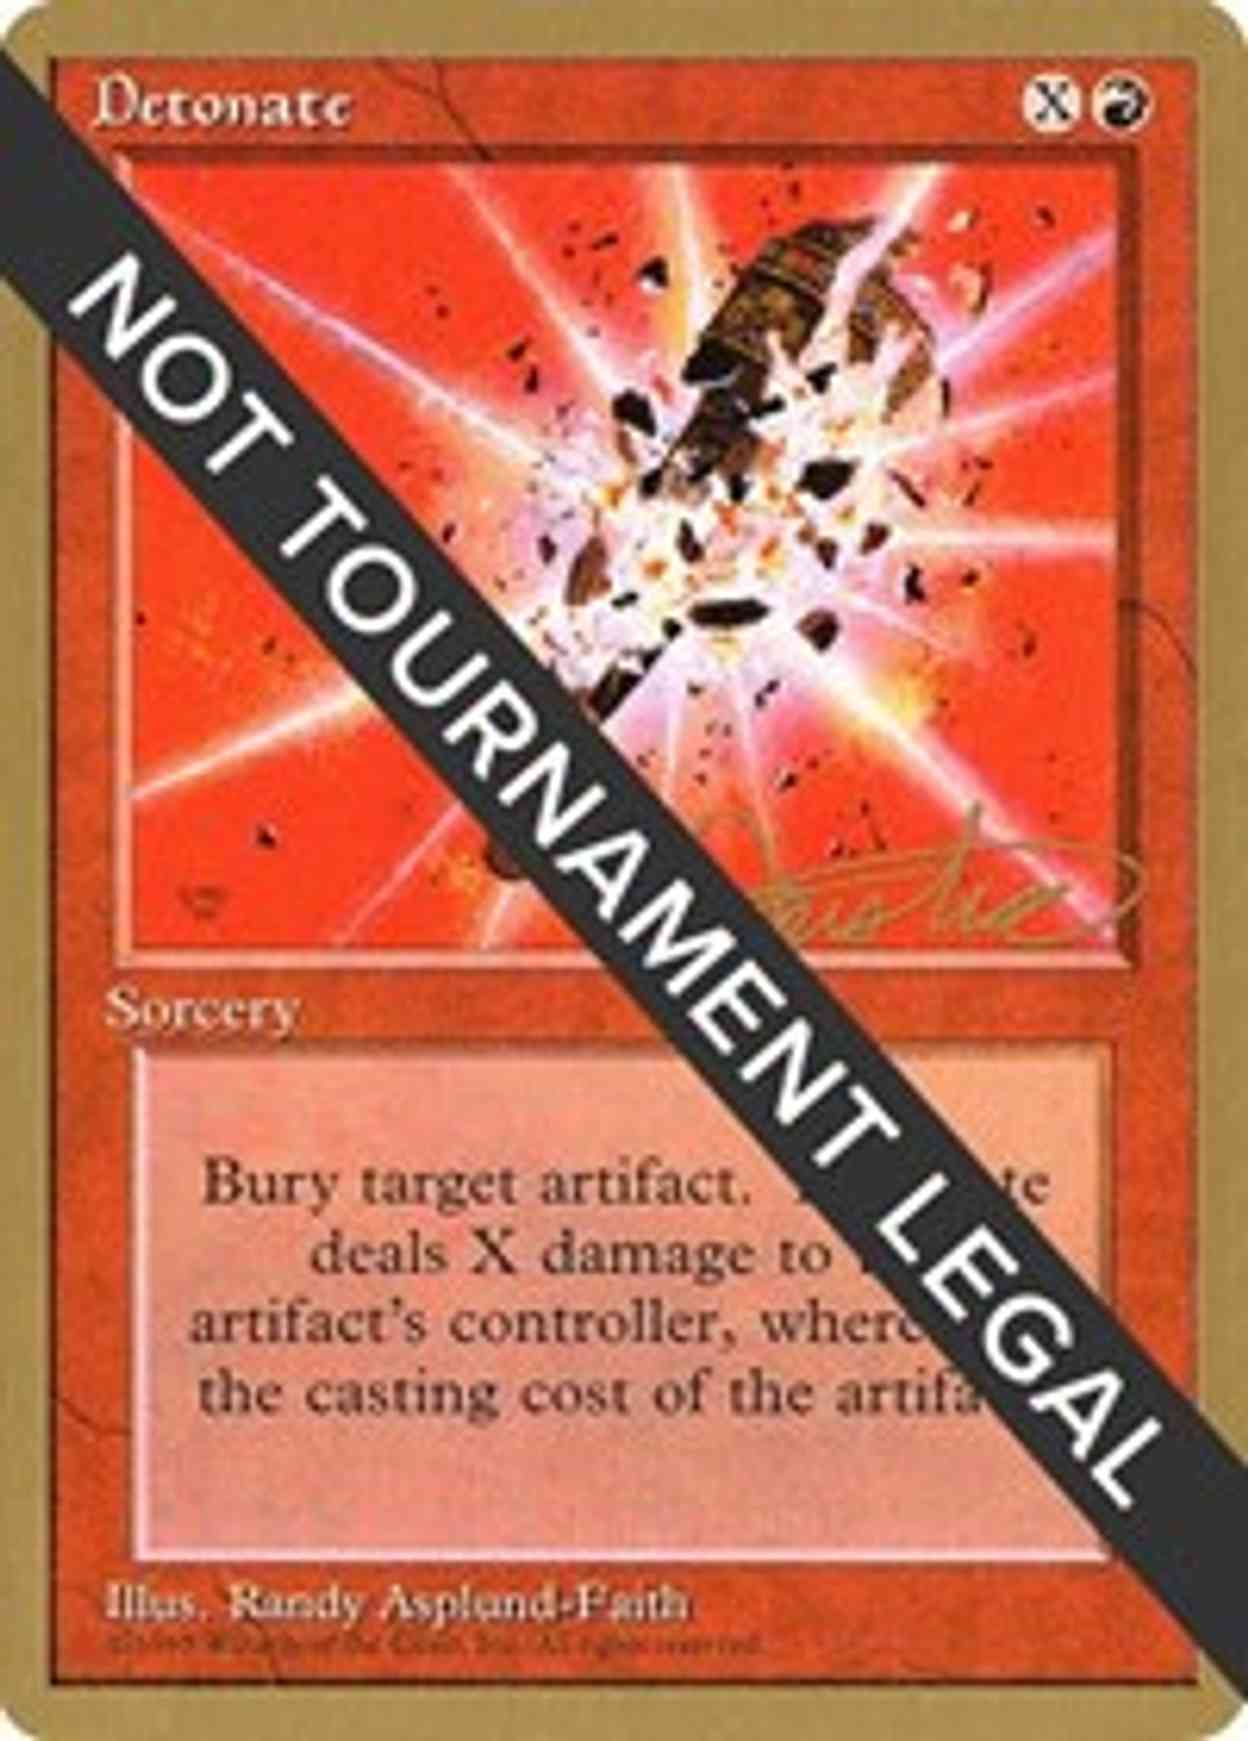 Detonate - 1996 Mark Justice (4ED) magic card front